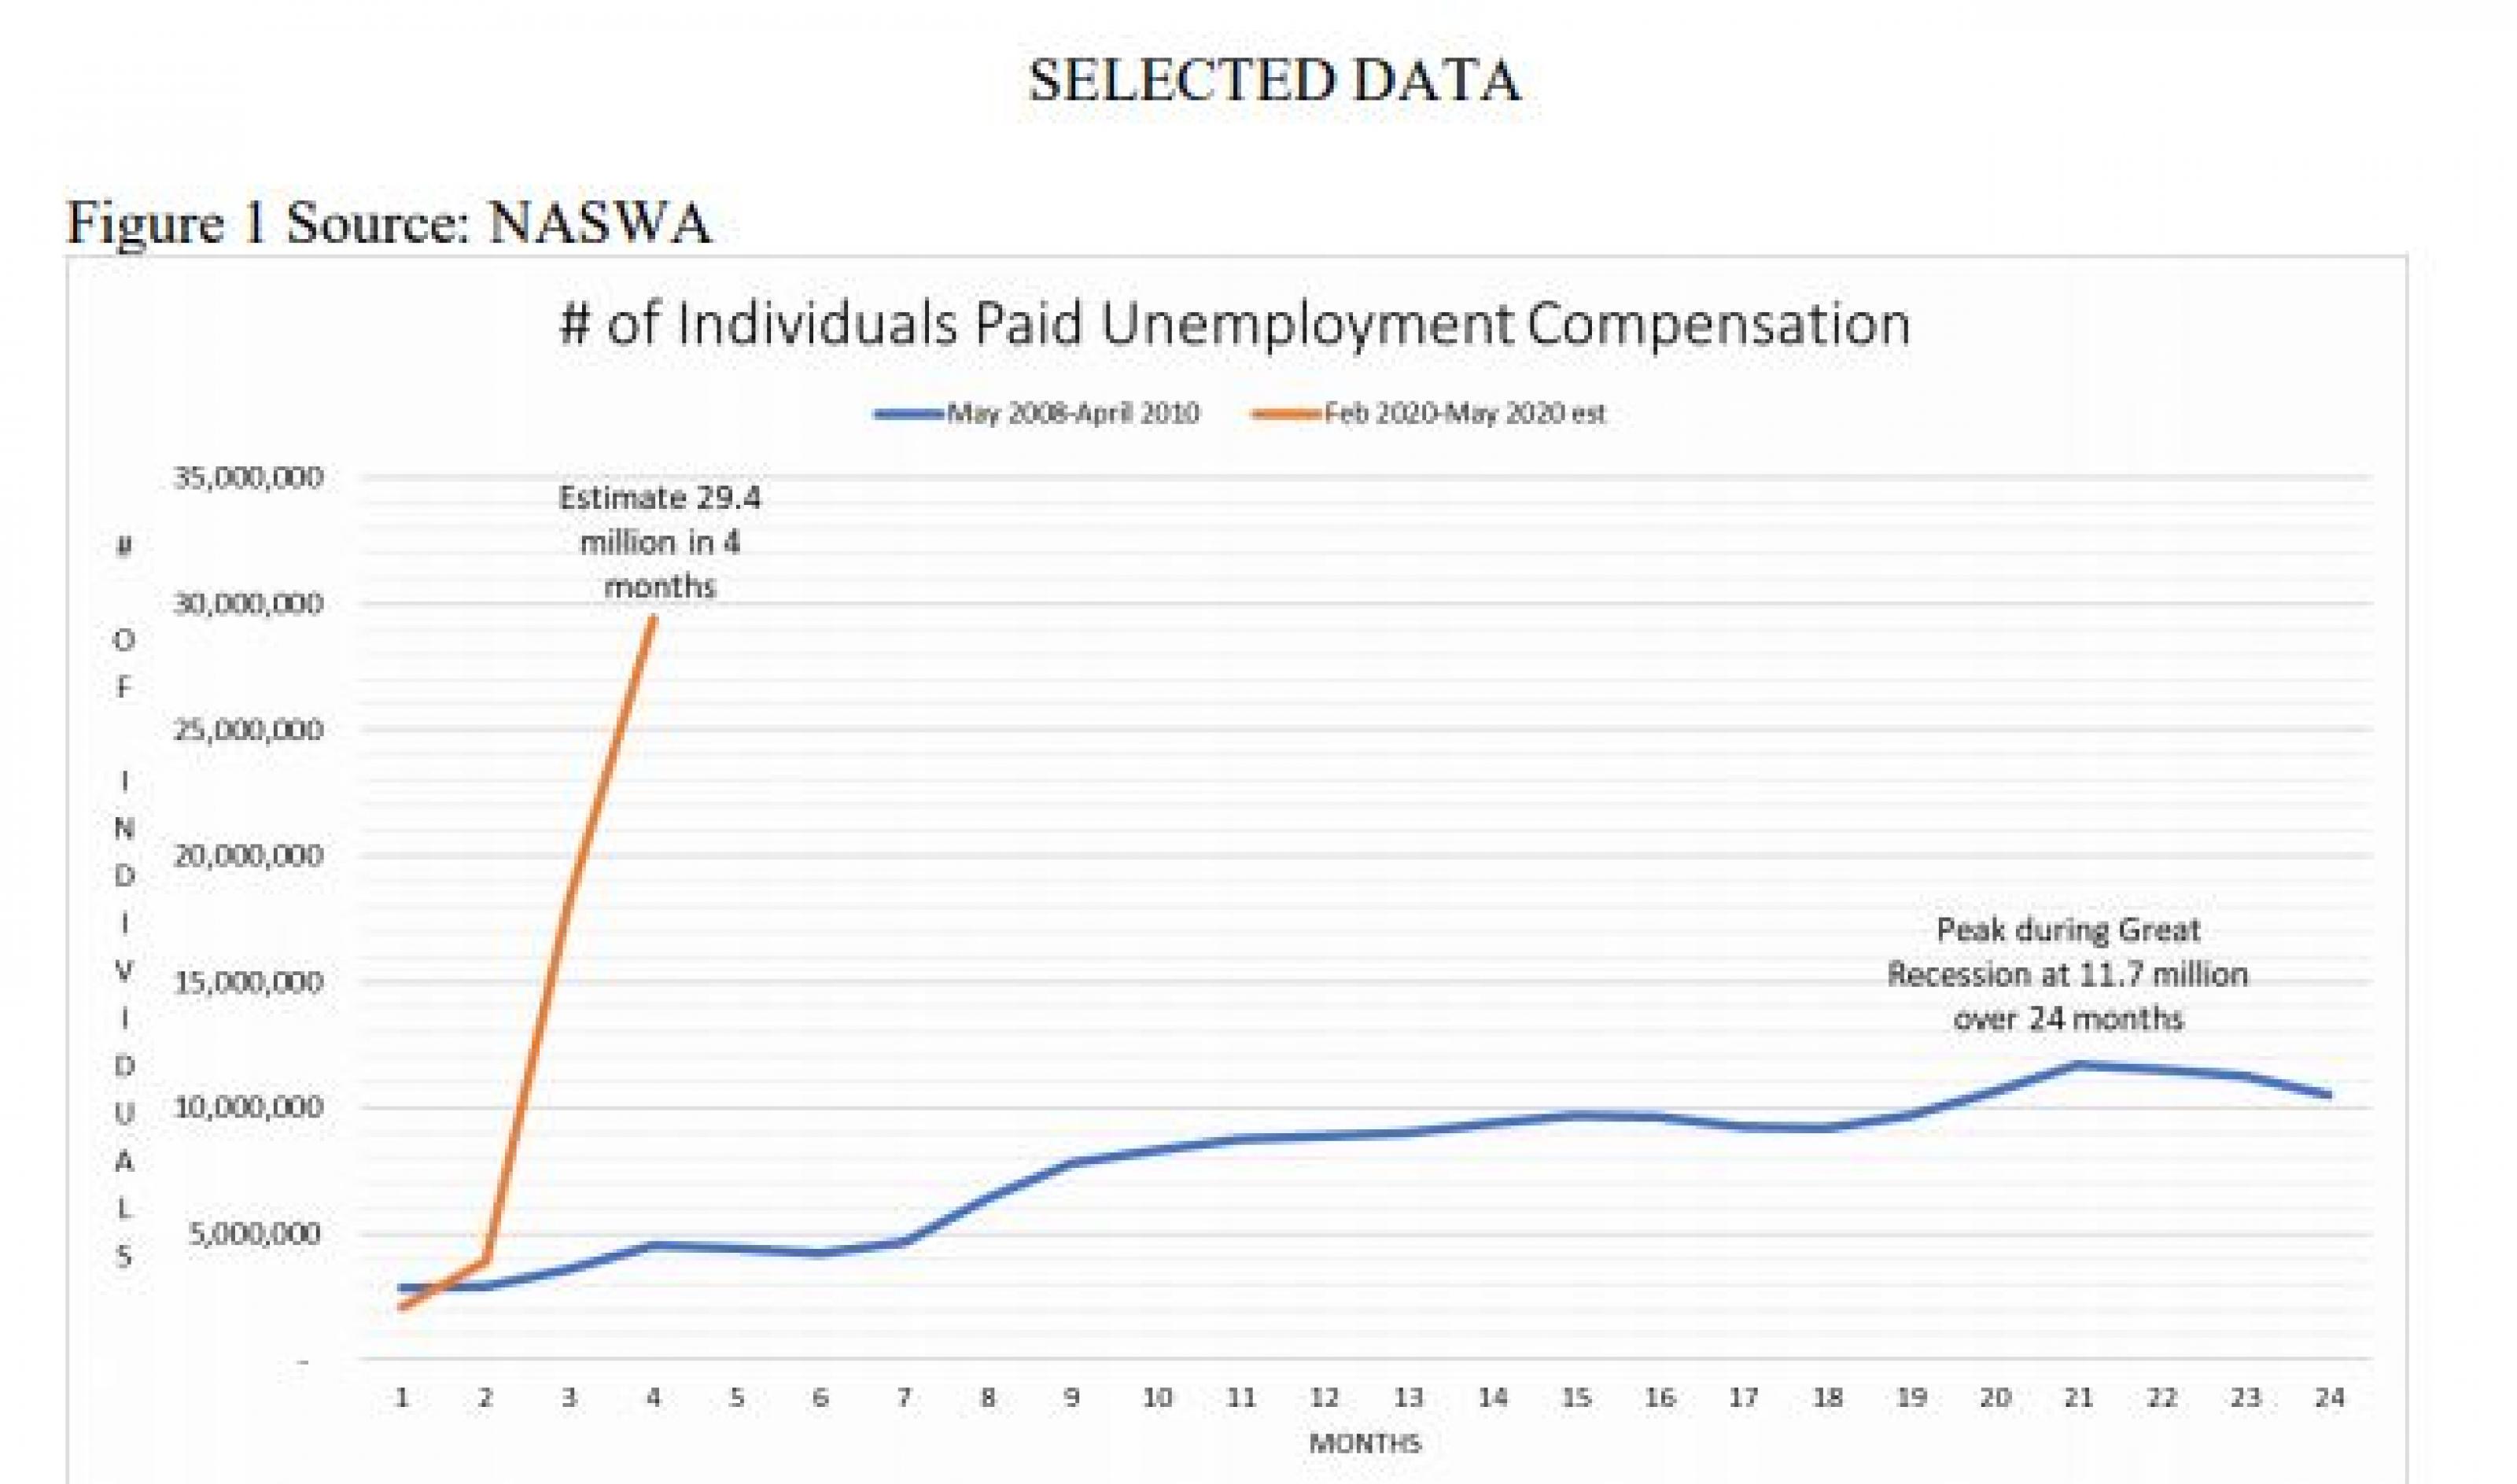 # of Individuals Paid Unemployment Compensation